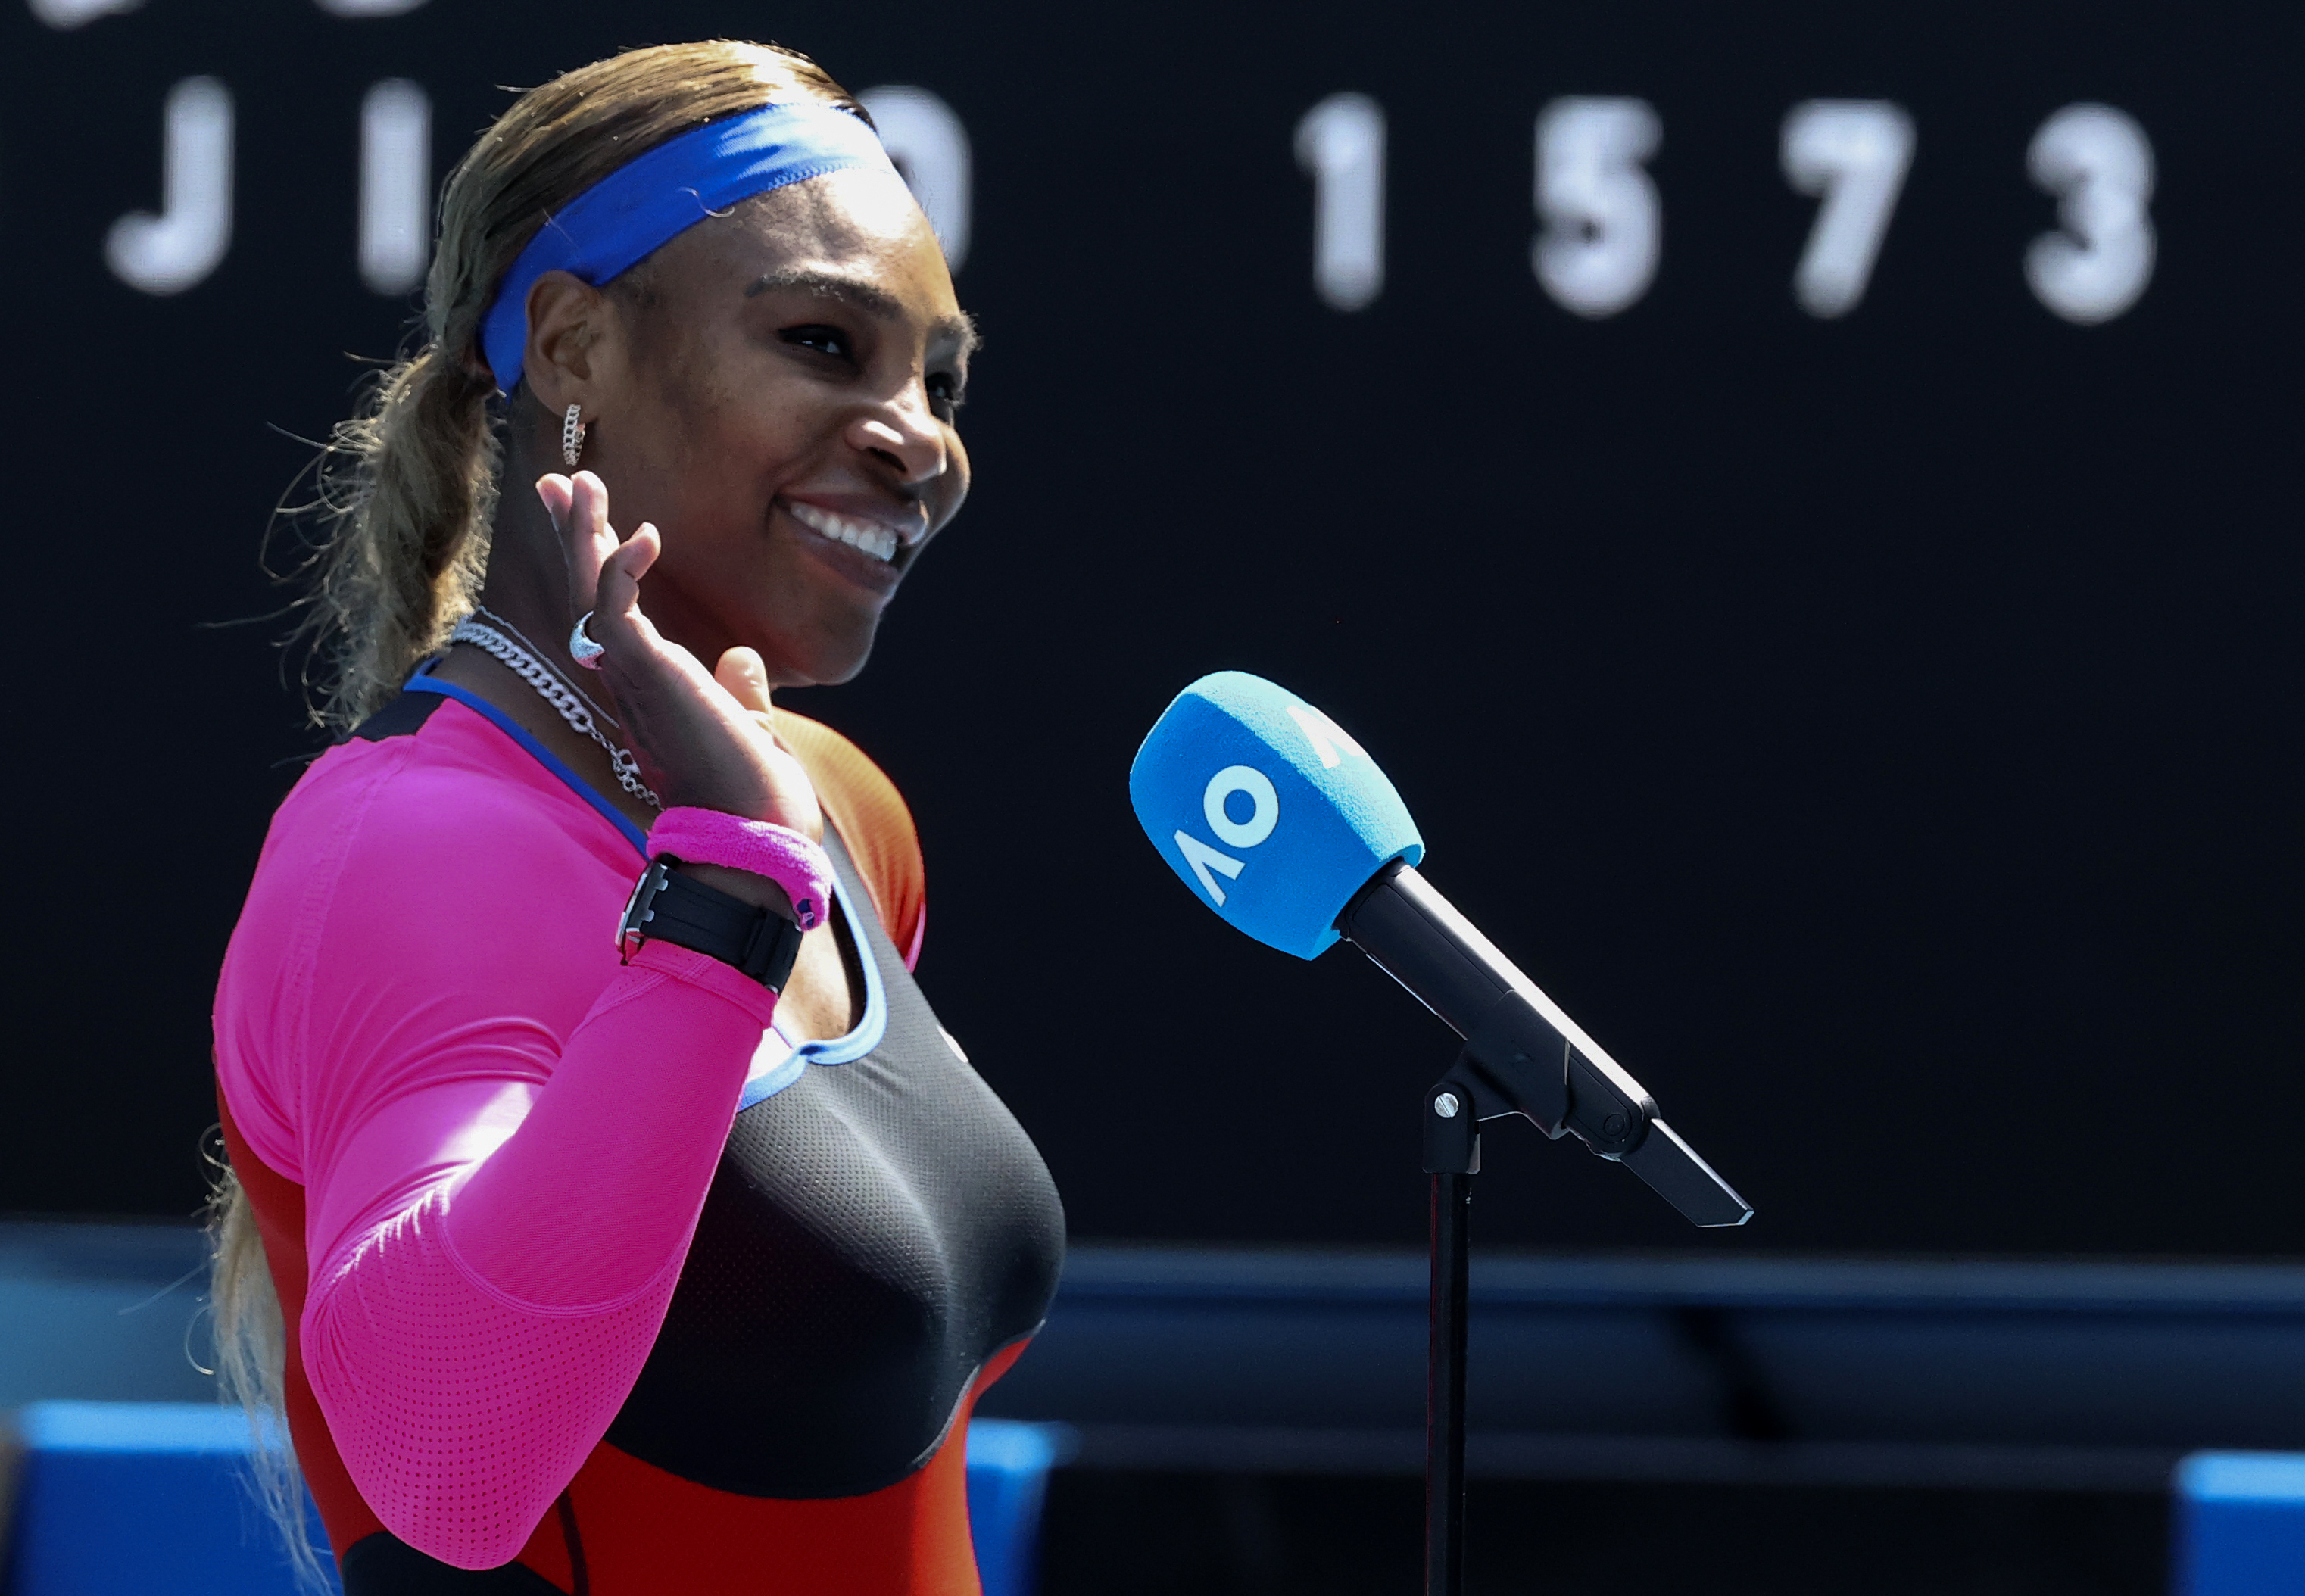 Australian Open free live stream (2/15/21) How to watch Serena Williams vs